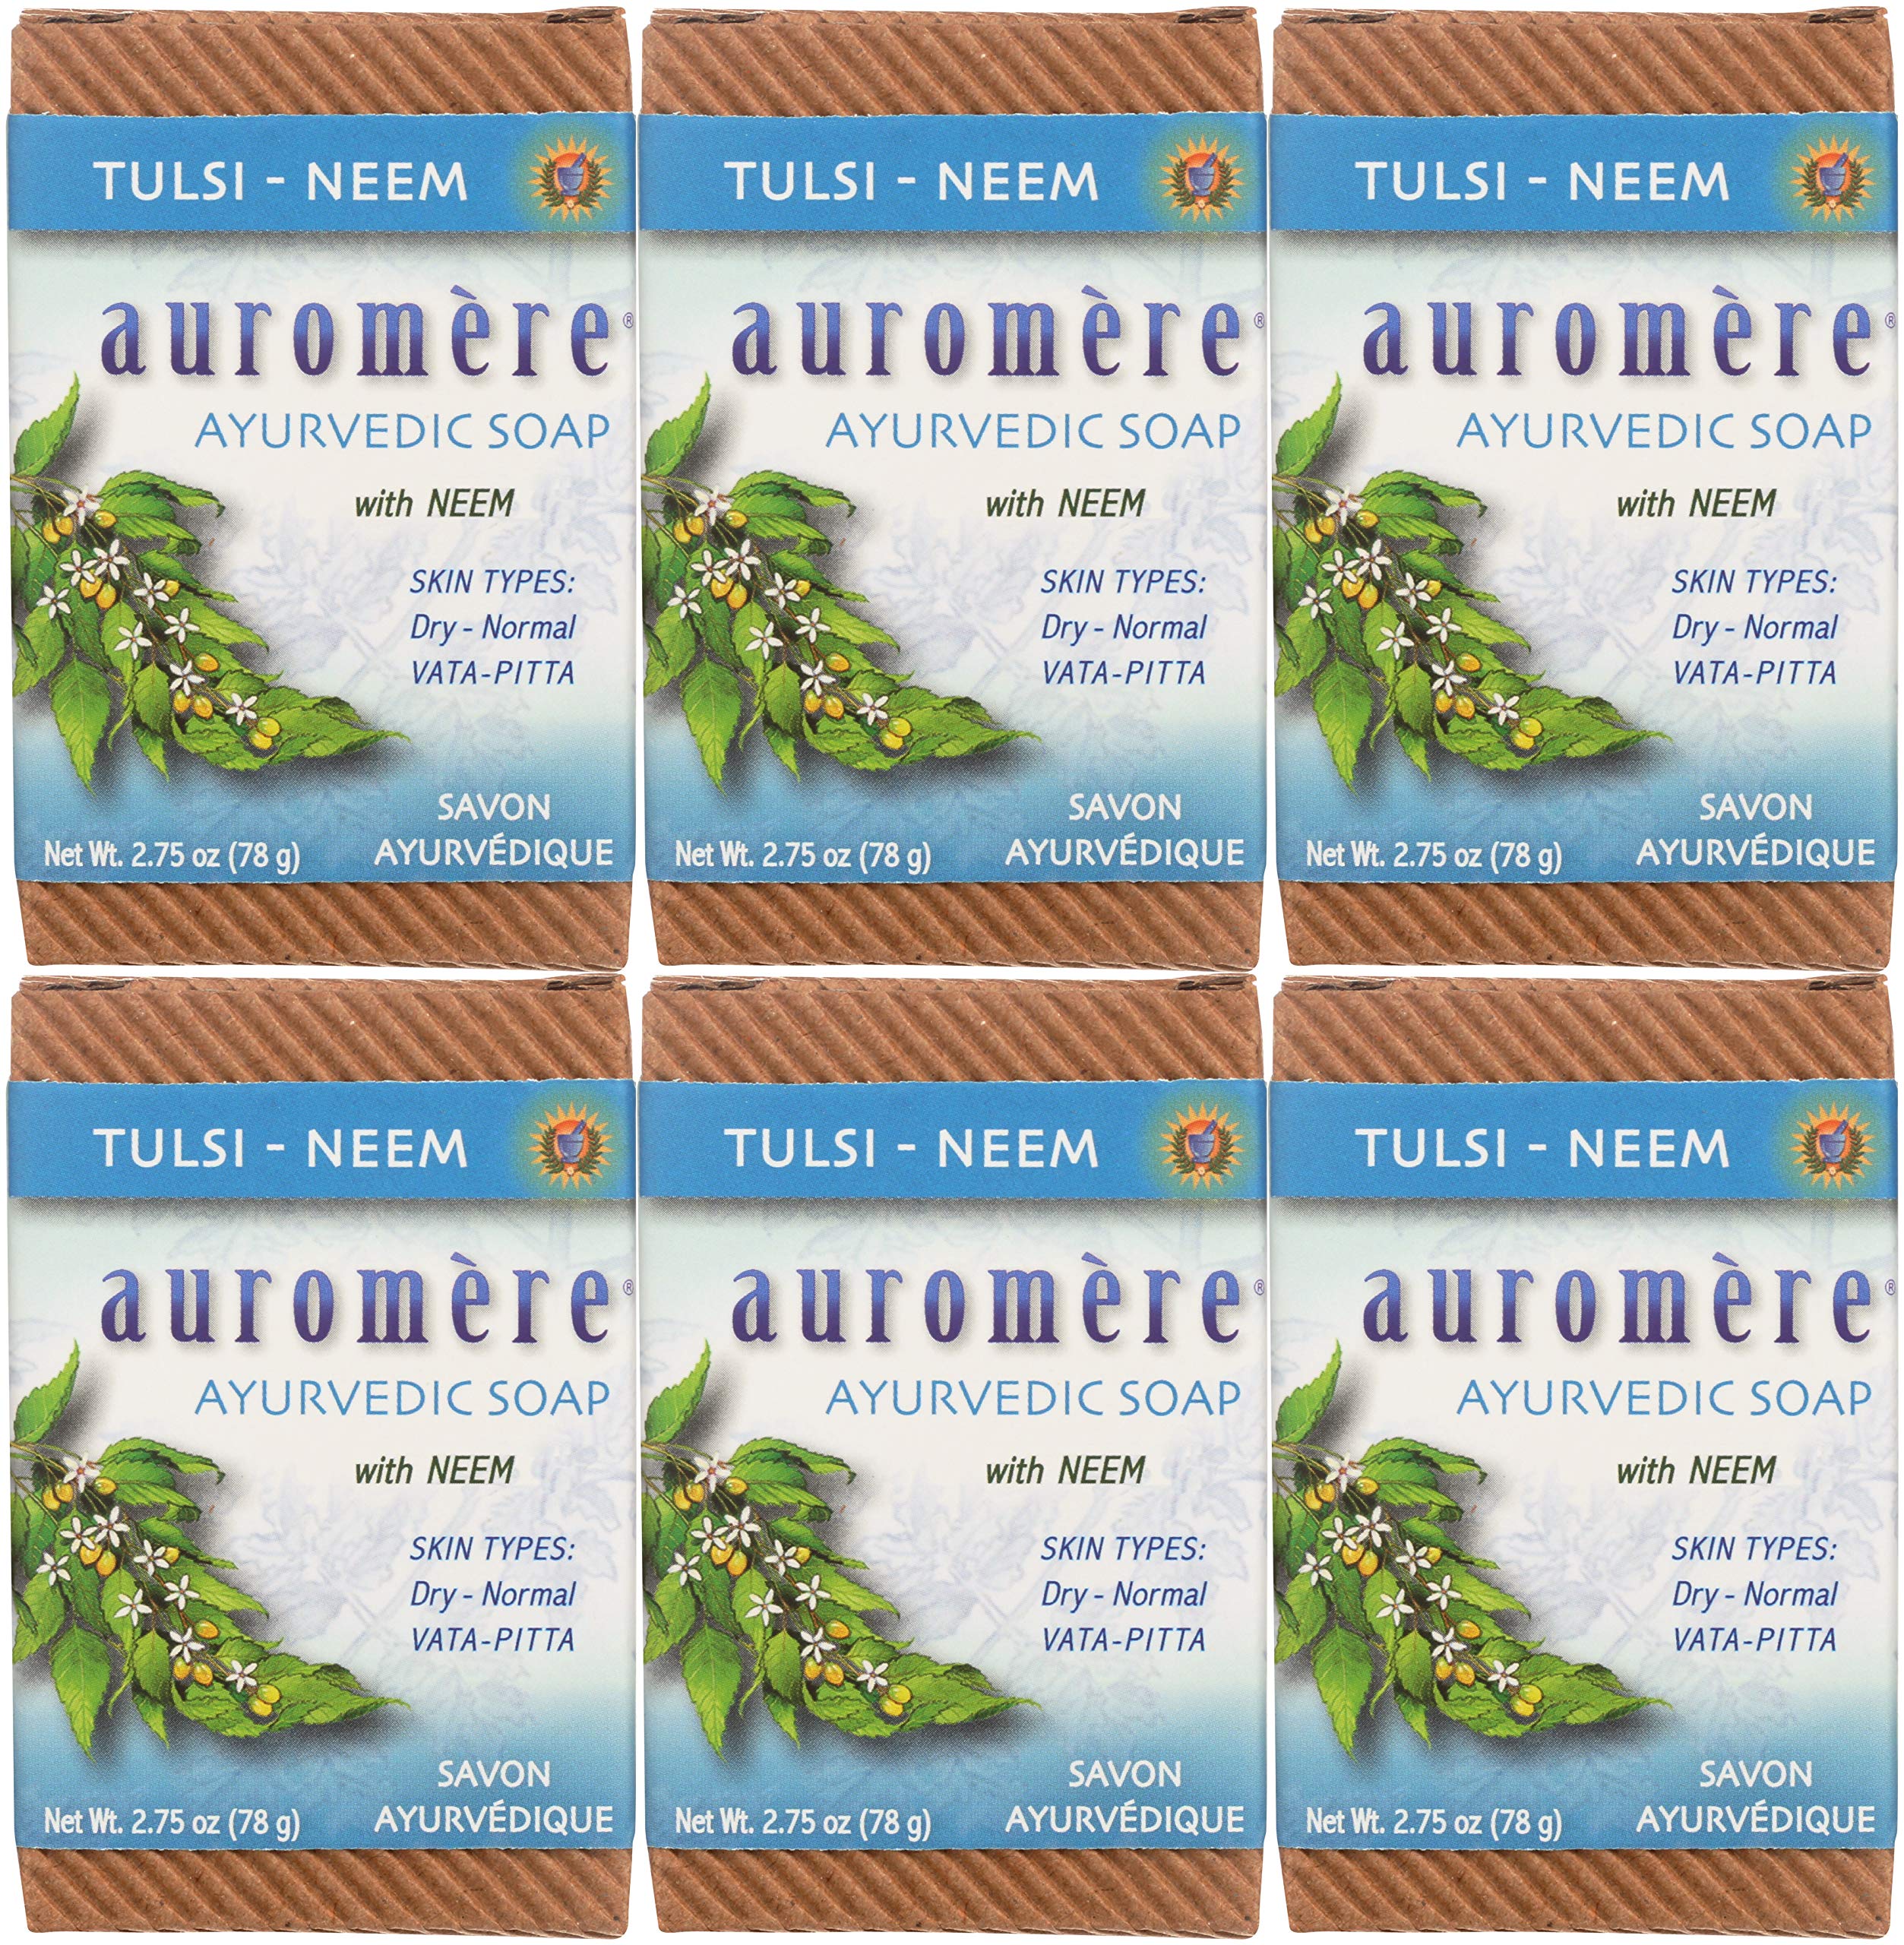 Auromere Ayurvedic Bar Soap, Tulsi Neem - Eco Friendly, Handmade, Vegan, Cruelty Free, Natural, Non GMO (2.75 oz), 6 pack